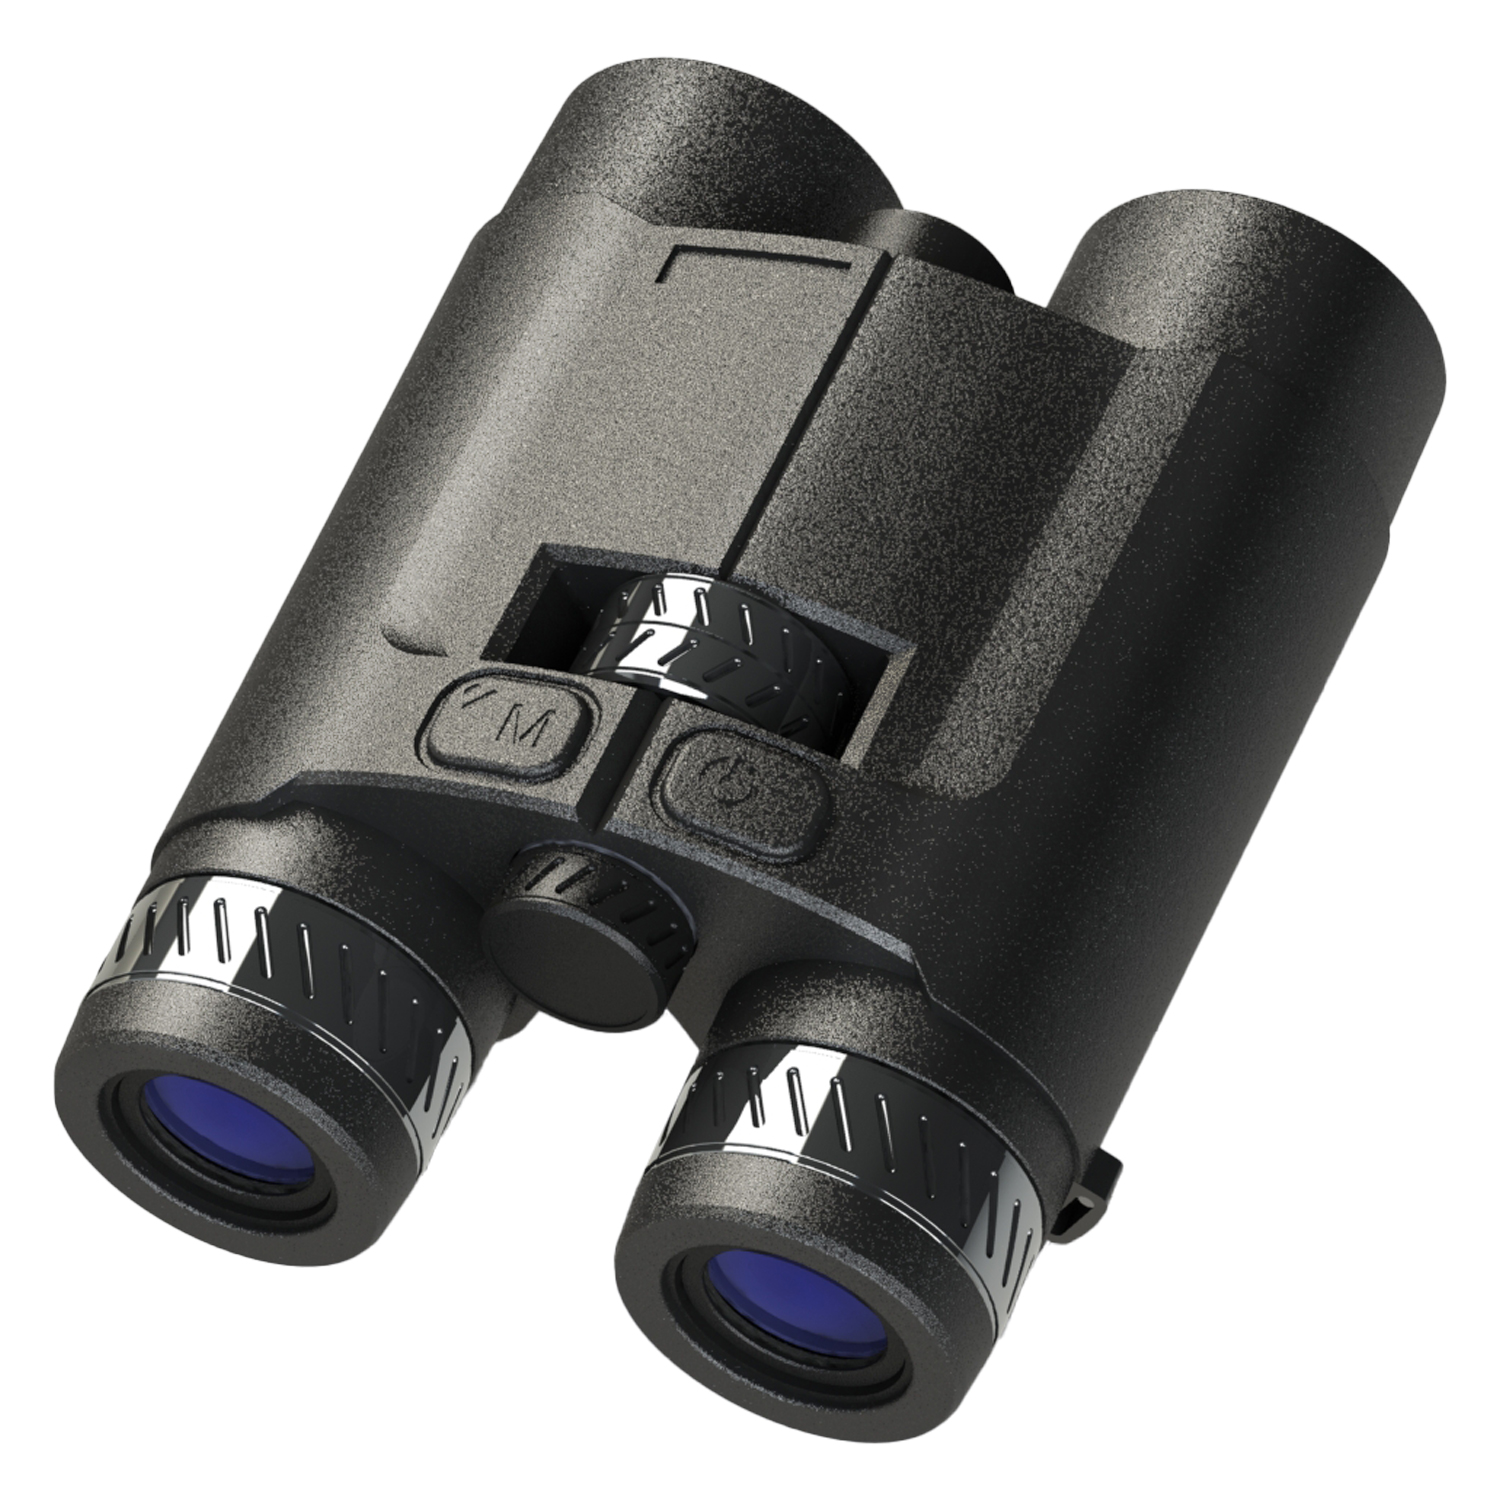 Regular Binoculars VS Rangefinding Binoculars